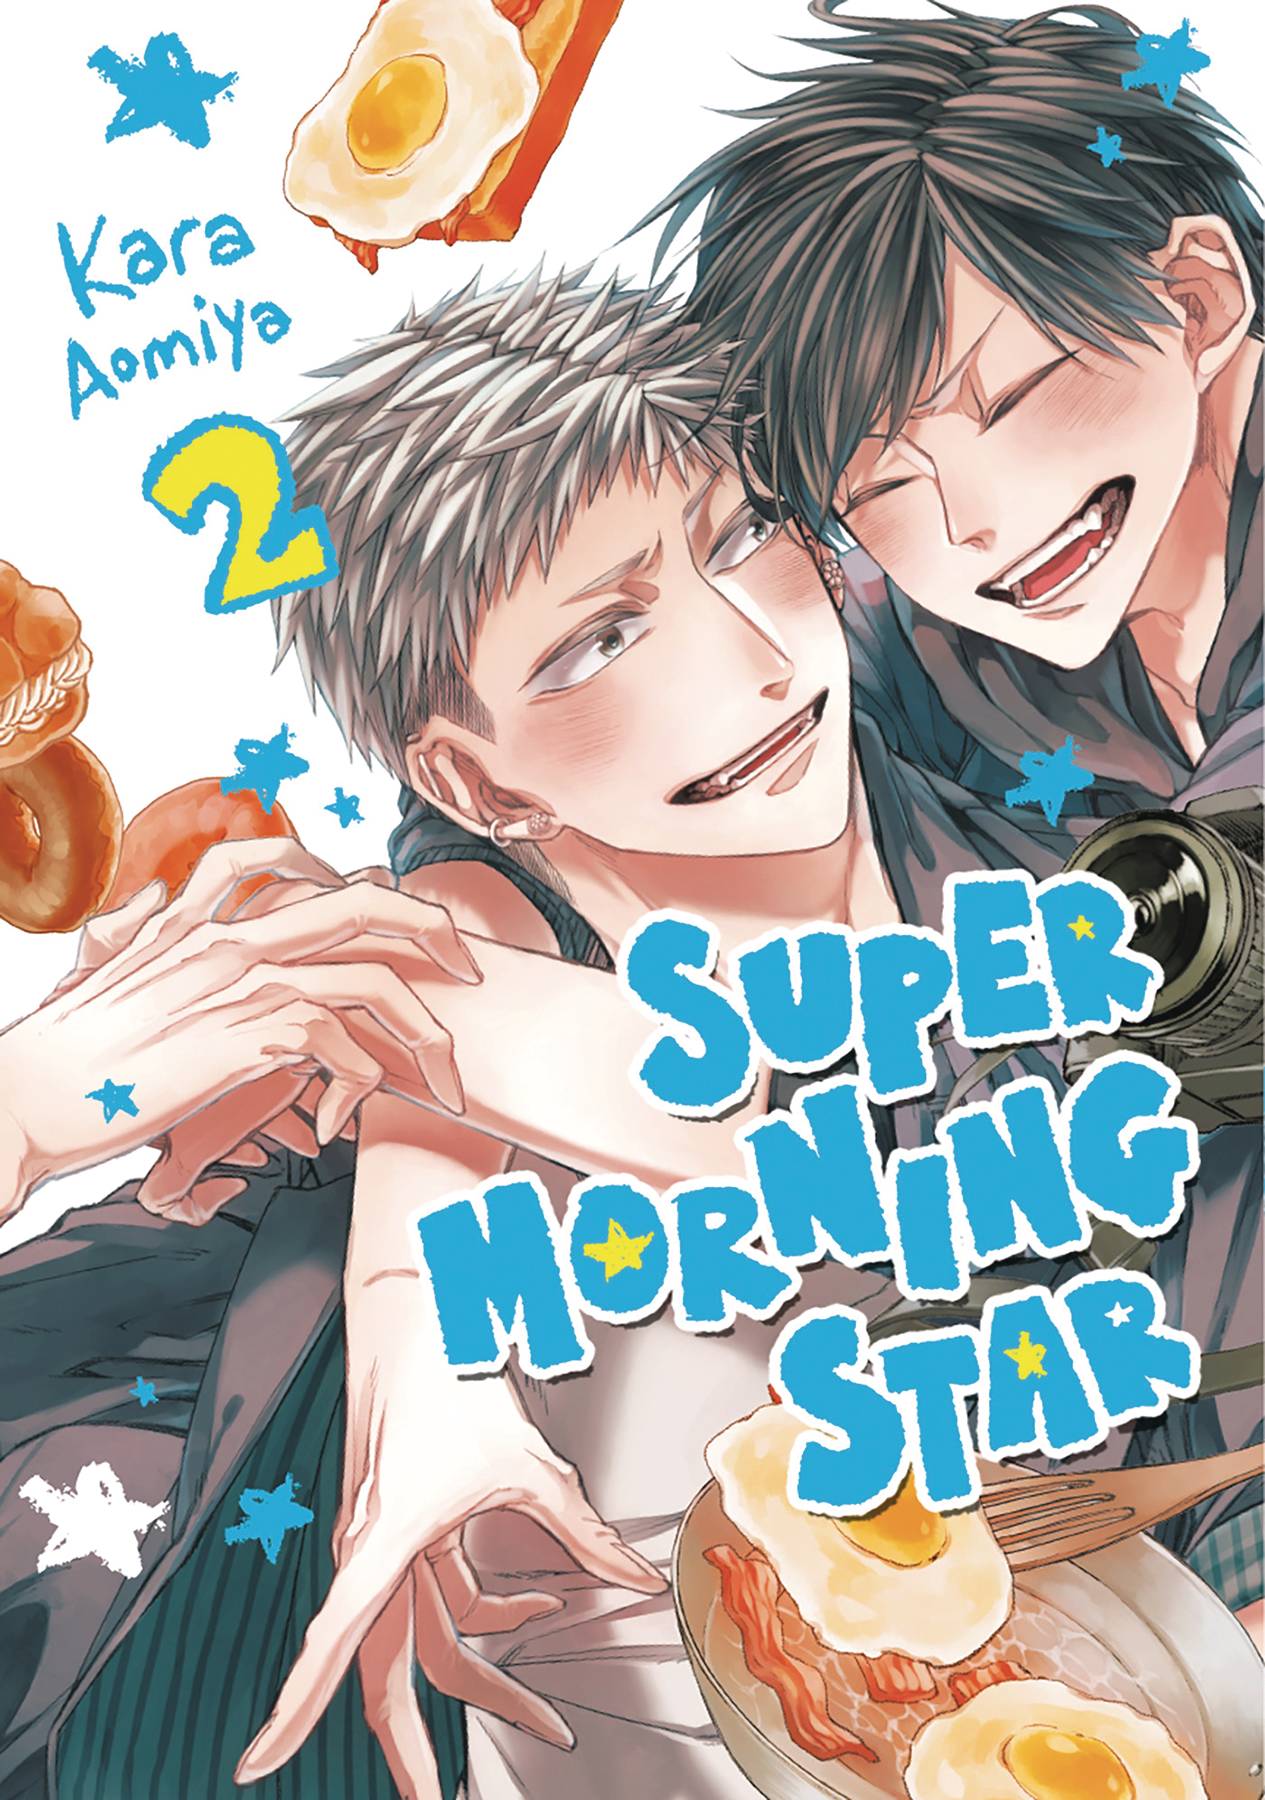 Super Morning Star Volume 2 GN (MR)